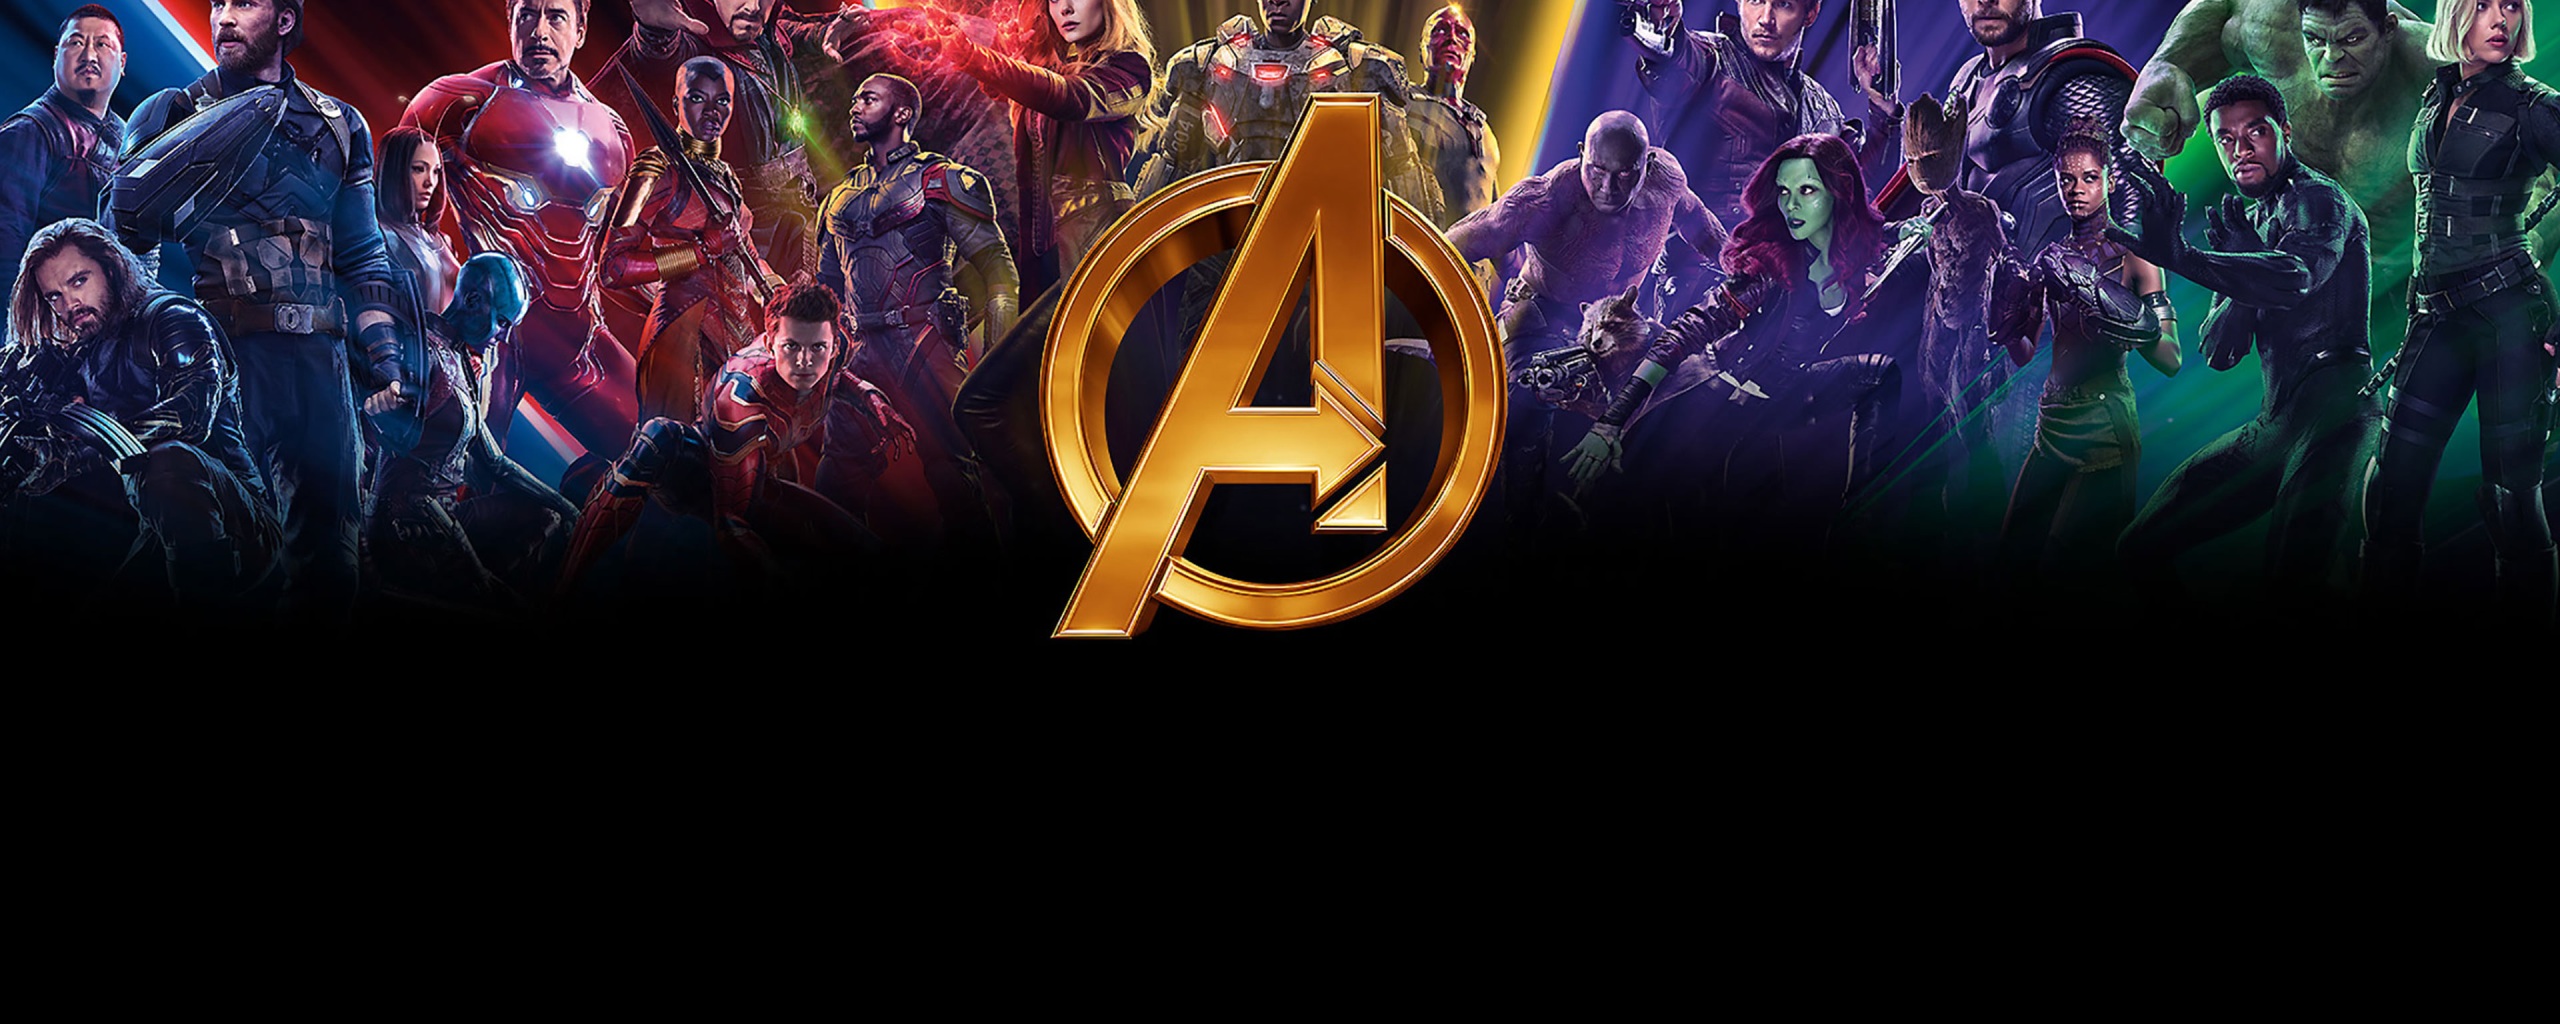 Avengers Infinity War 4k - 4k Wallpapers - 40.000+ ipad wallpapers 4k ...